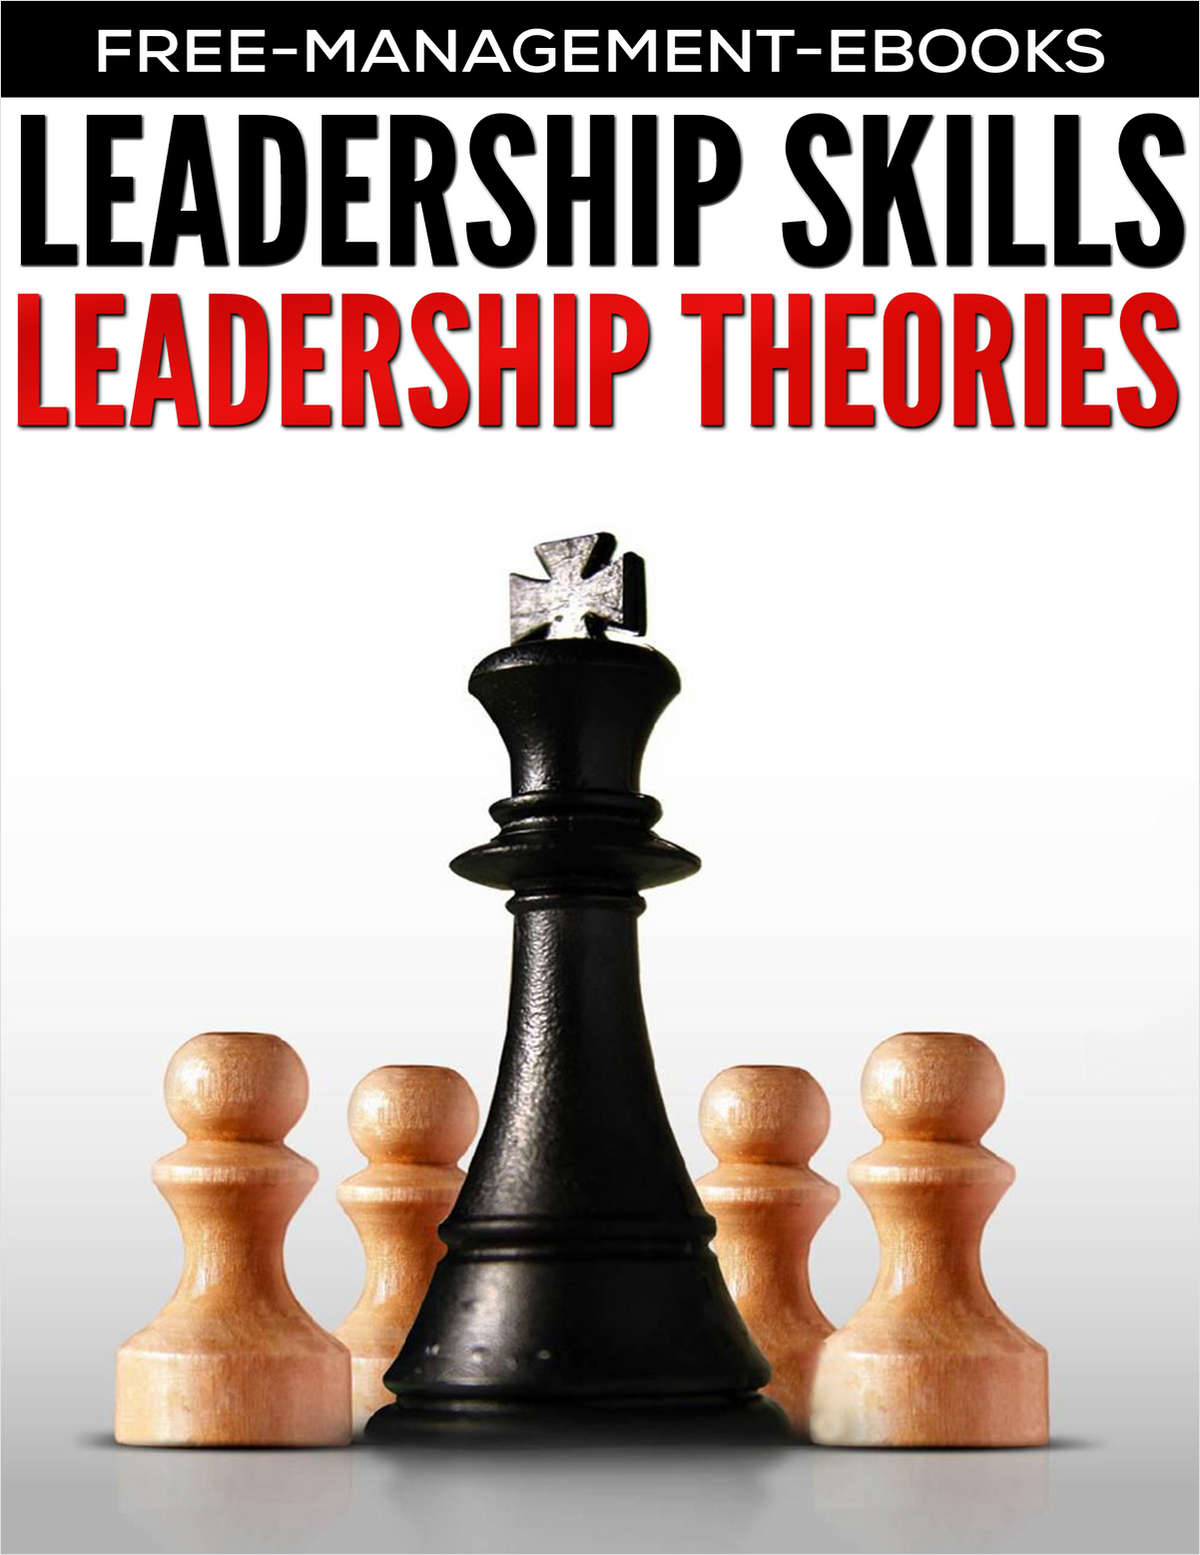 Leadership Theories - Developing Your Leadership Skills